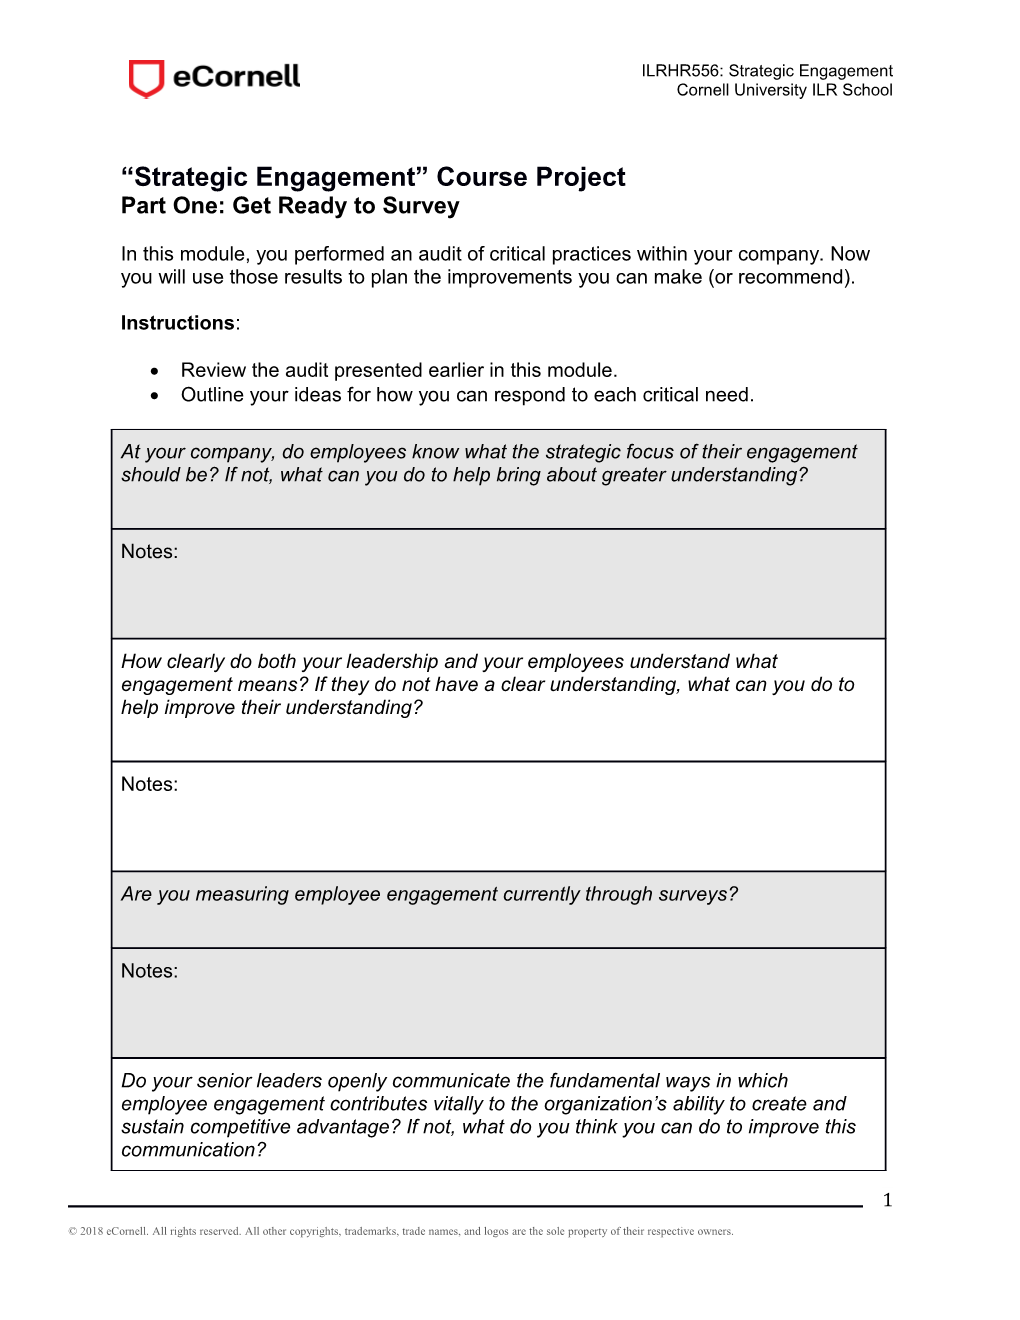 Strategic Engagement Course Project